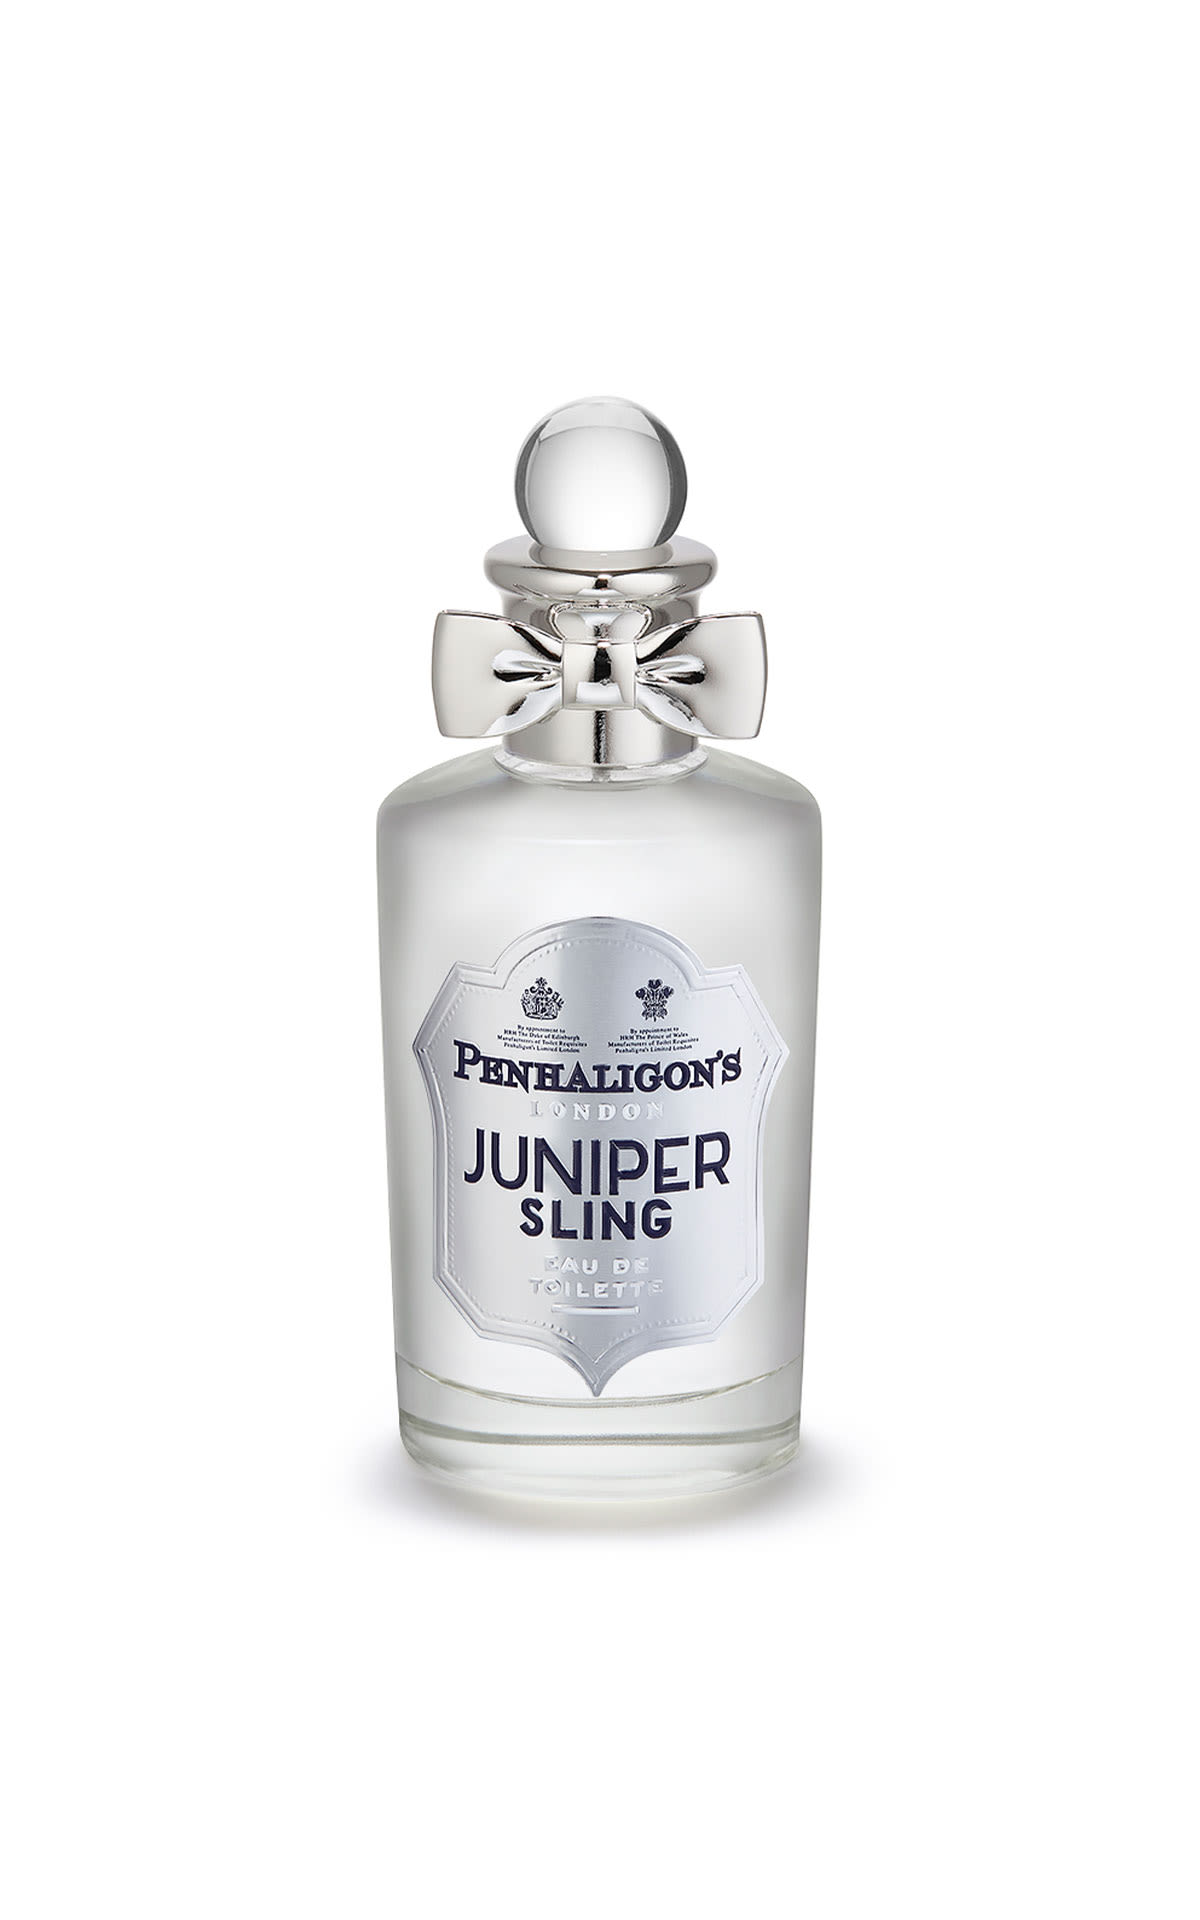 Penhaligon's Juniper sling eau de parfum from Bicester Village